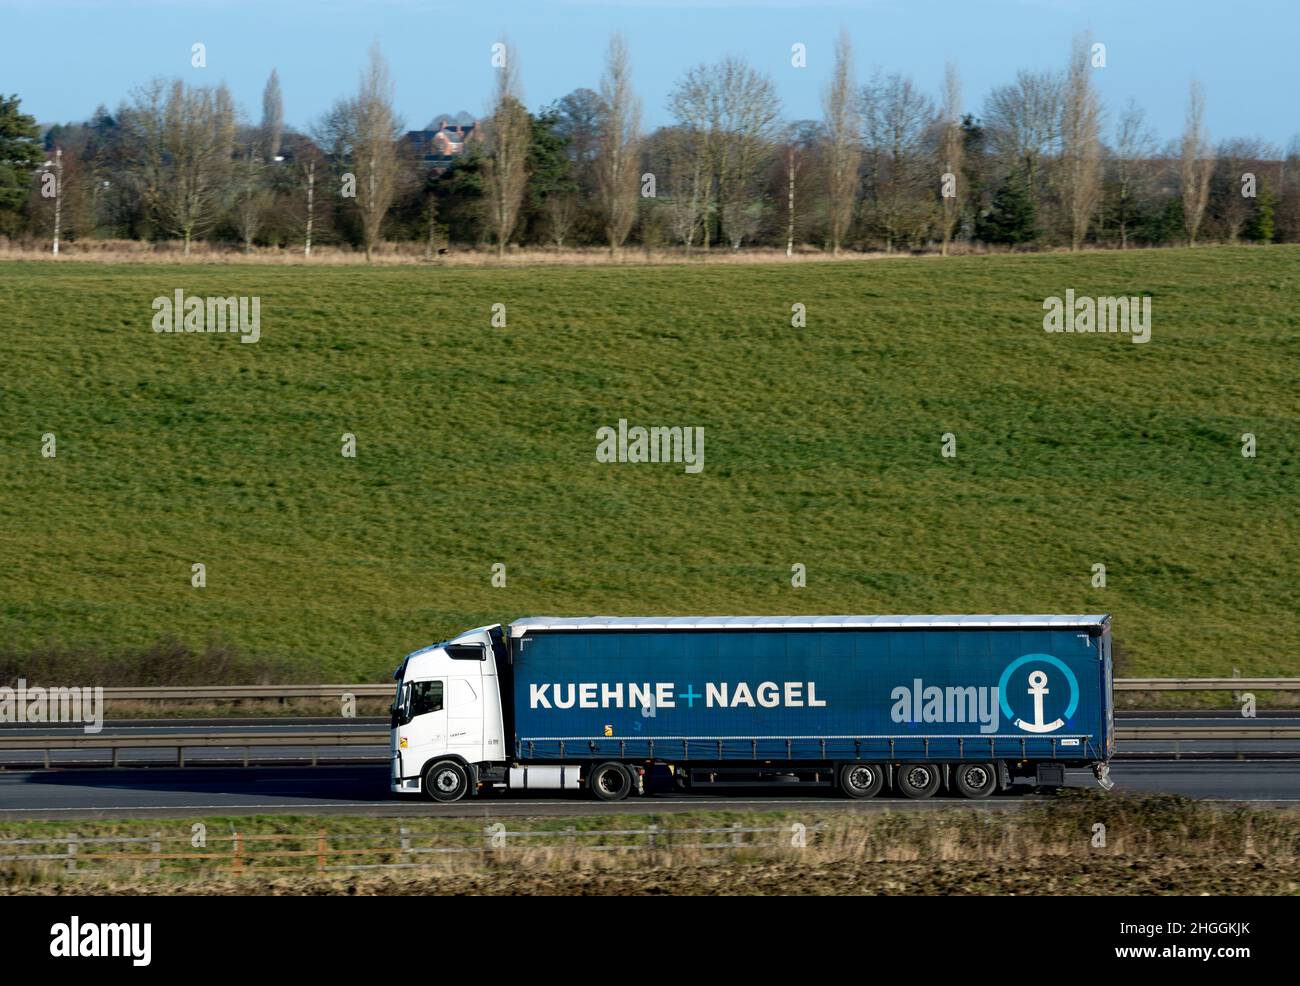 Kuehne and Nagel lorry on the M40 motorway, Warwickshire, UK Stock Photo